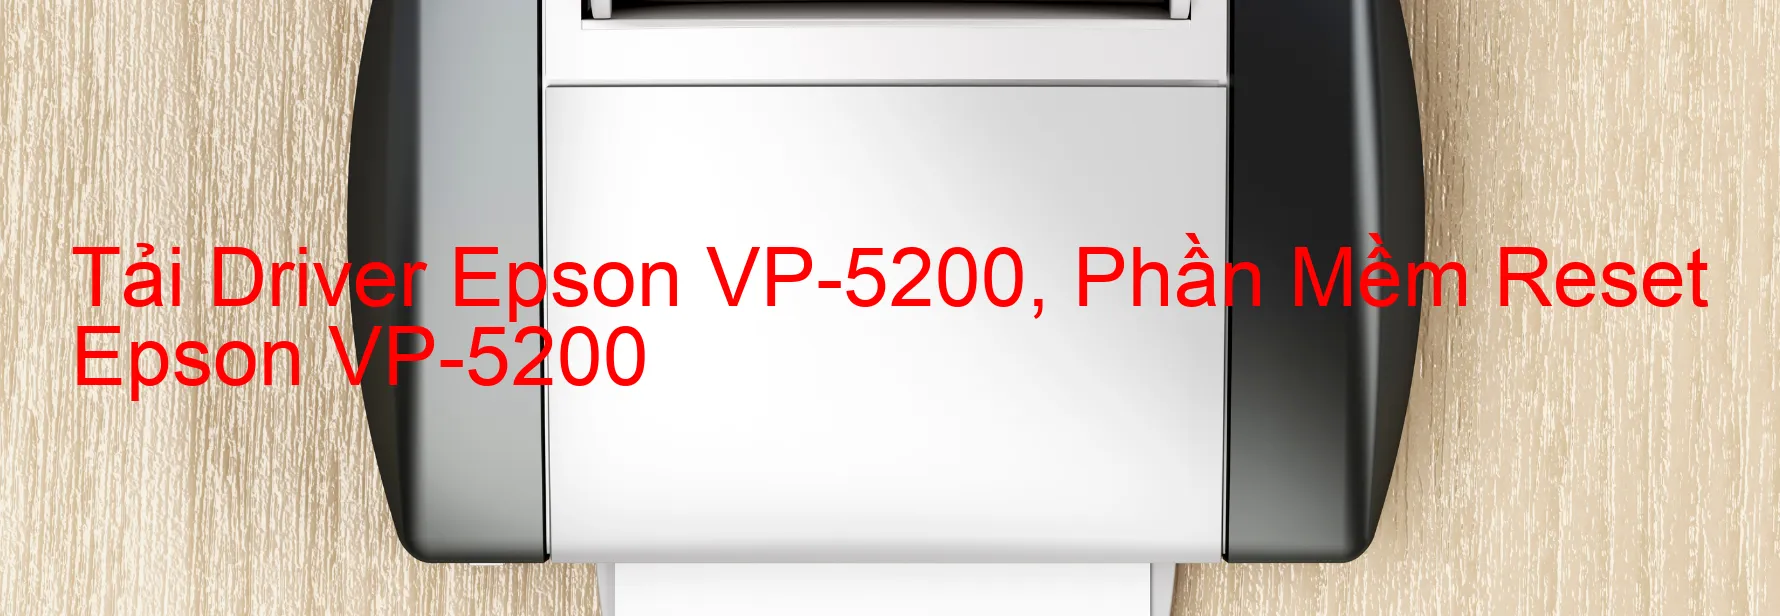 Driver Epson VP-5200, Phần Mềm Reset Epson VP-5200